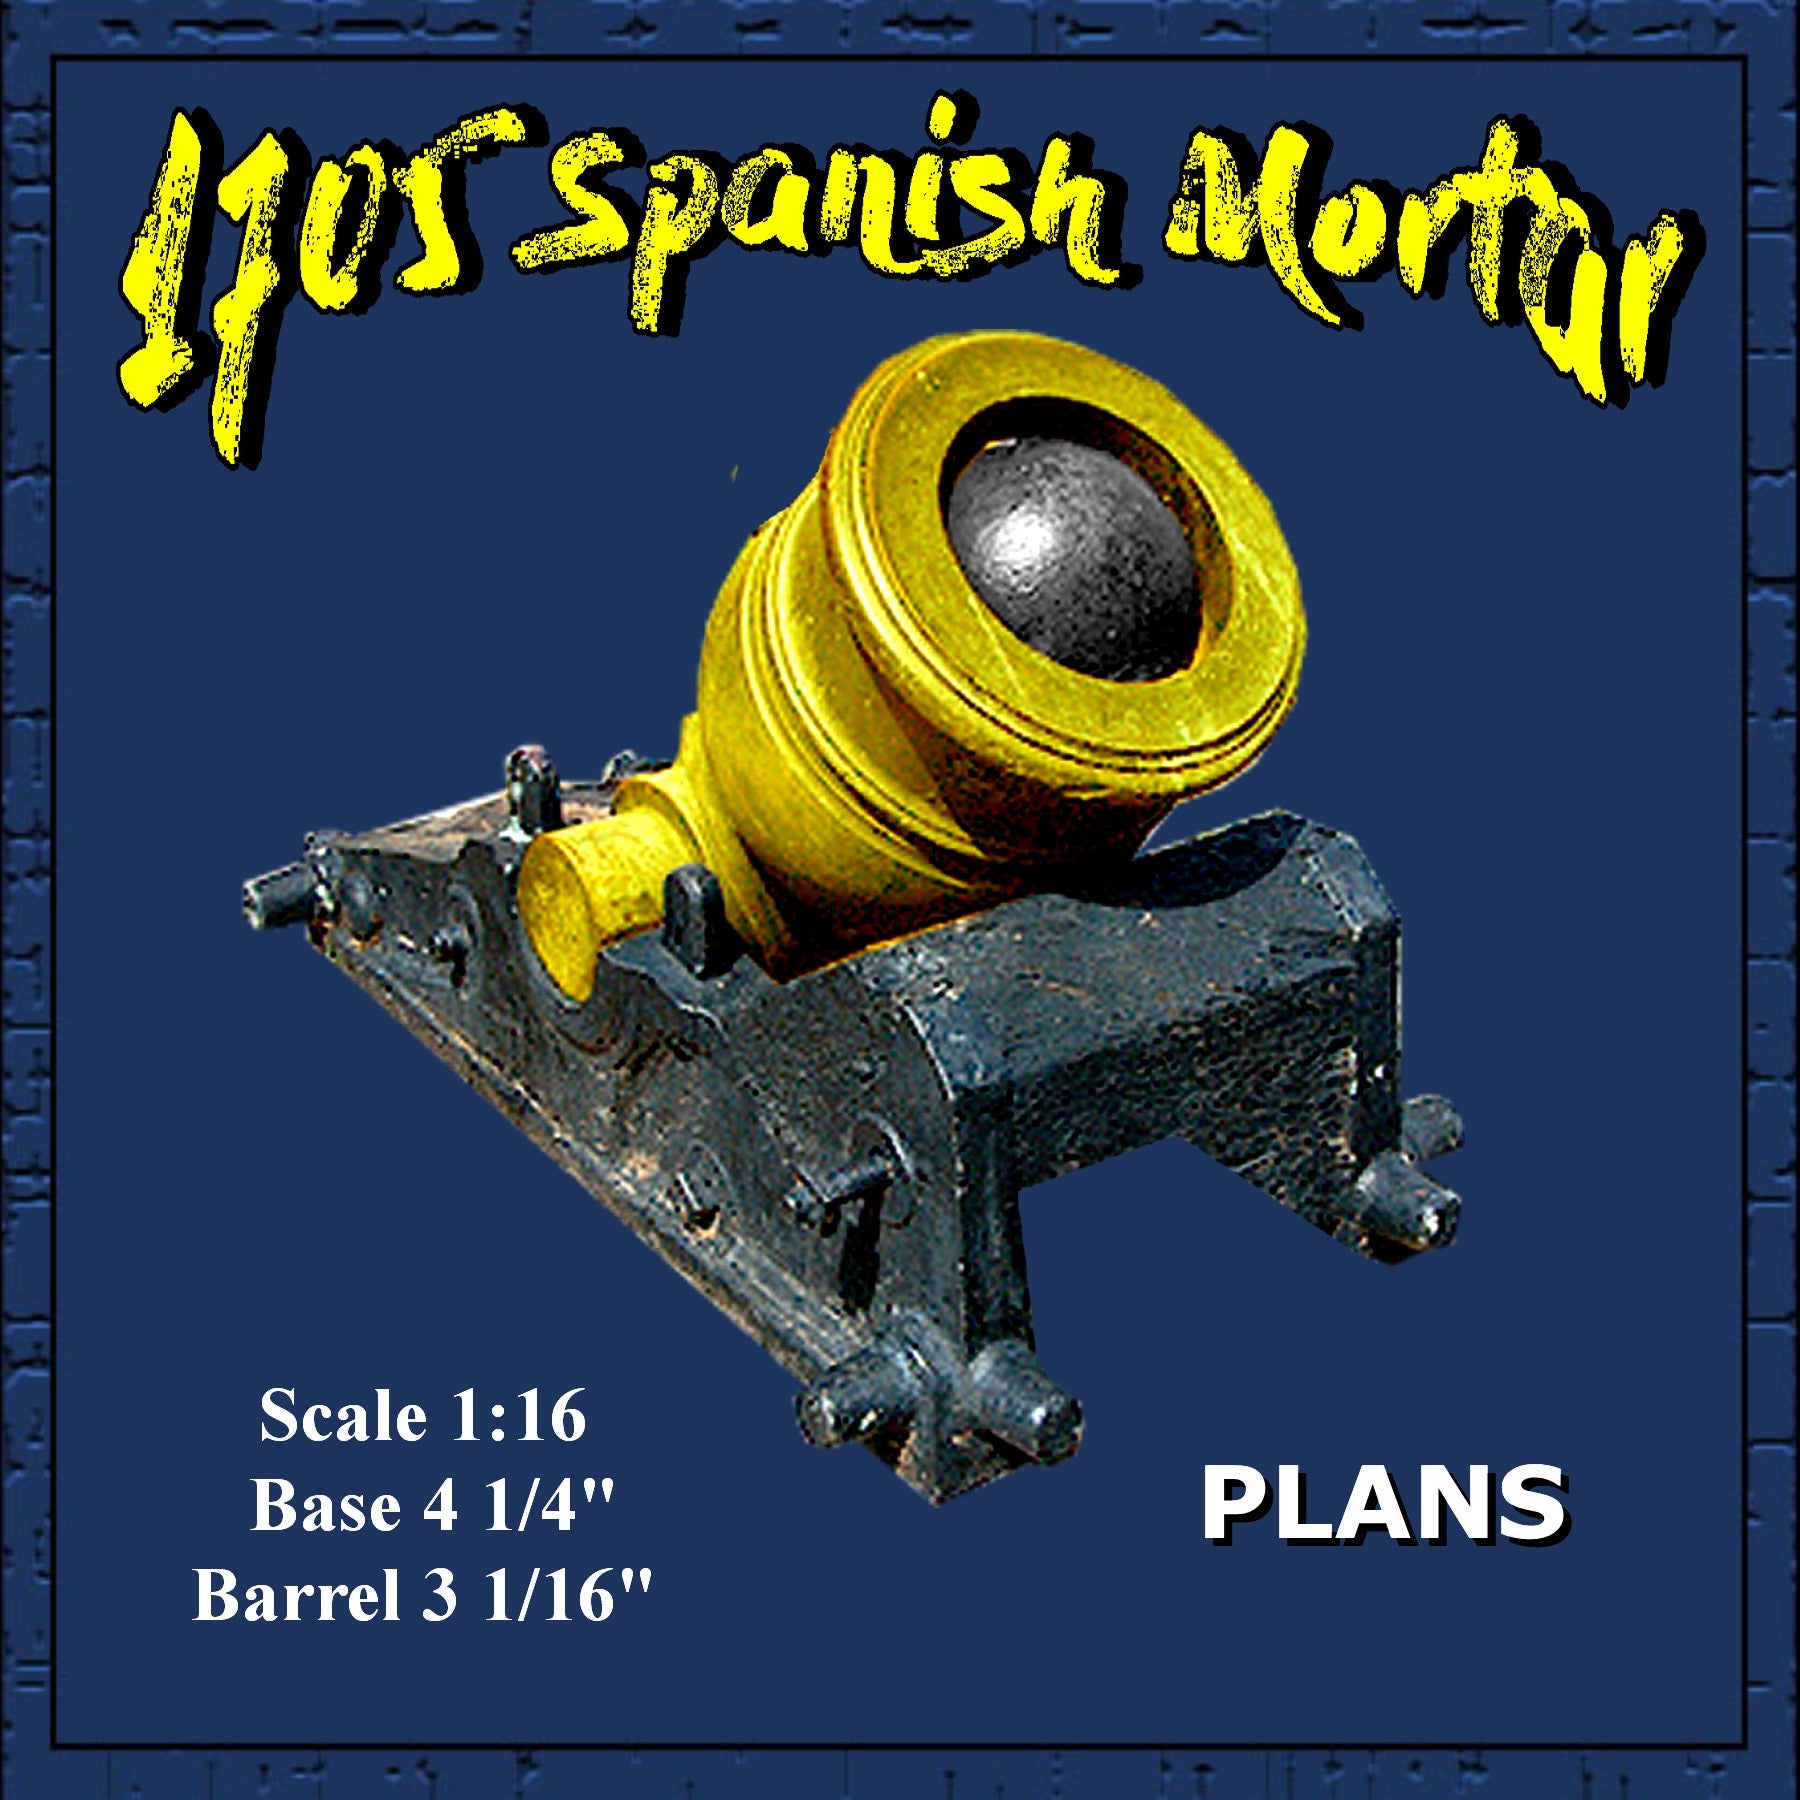 full size printed plan 1705 spanish mortar scale 1:16   base 4 1/4"  barrel 3 1/16